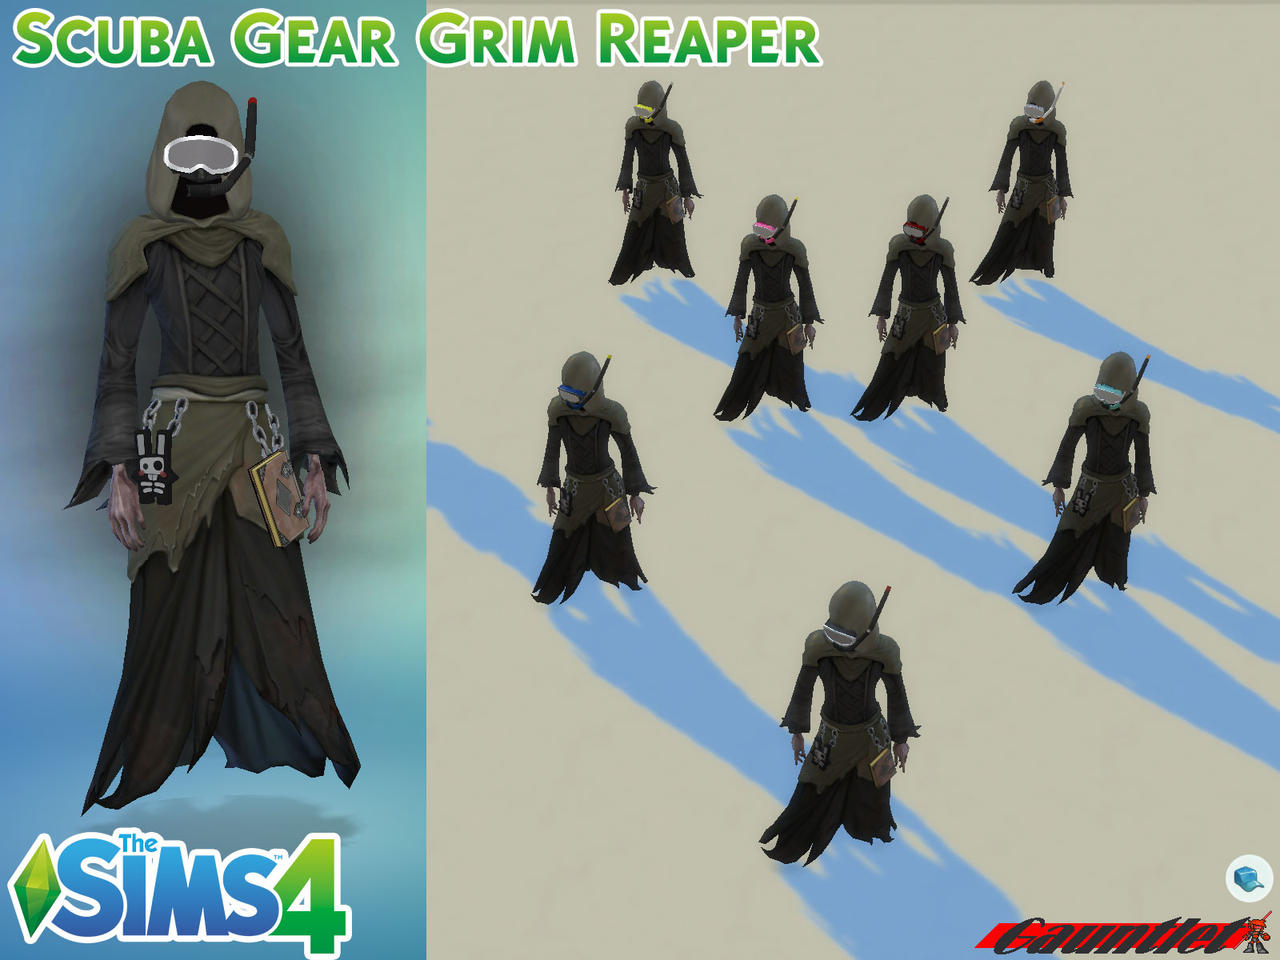 Sims4 Scuba Gear Grim Reaper